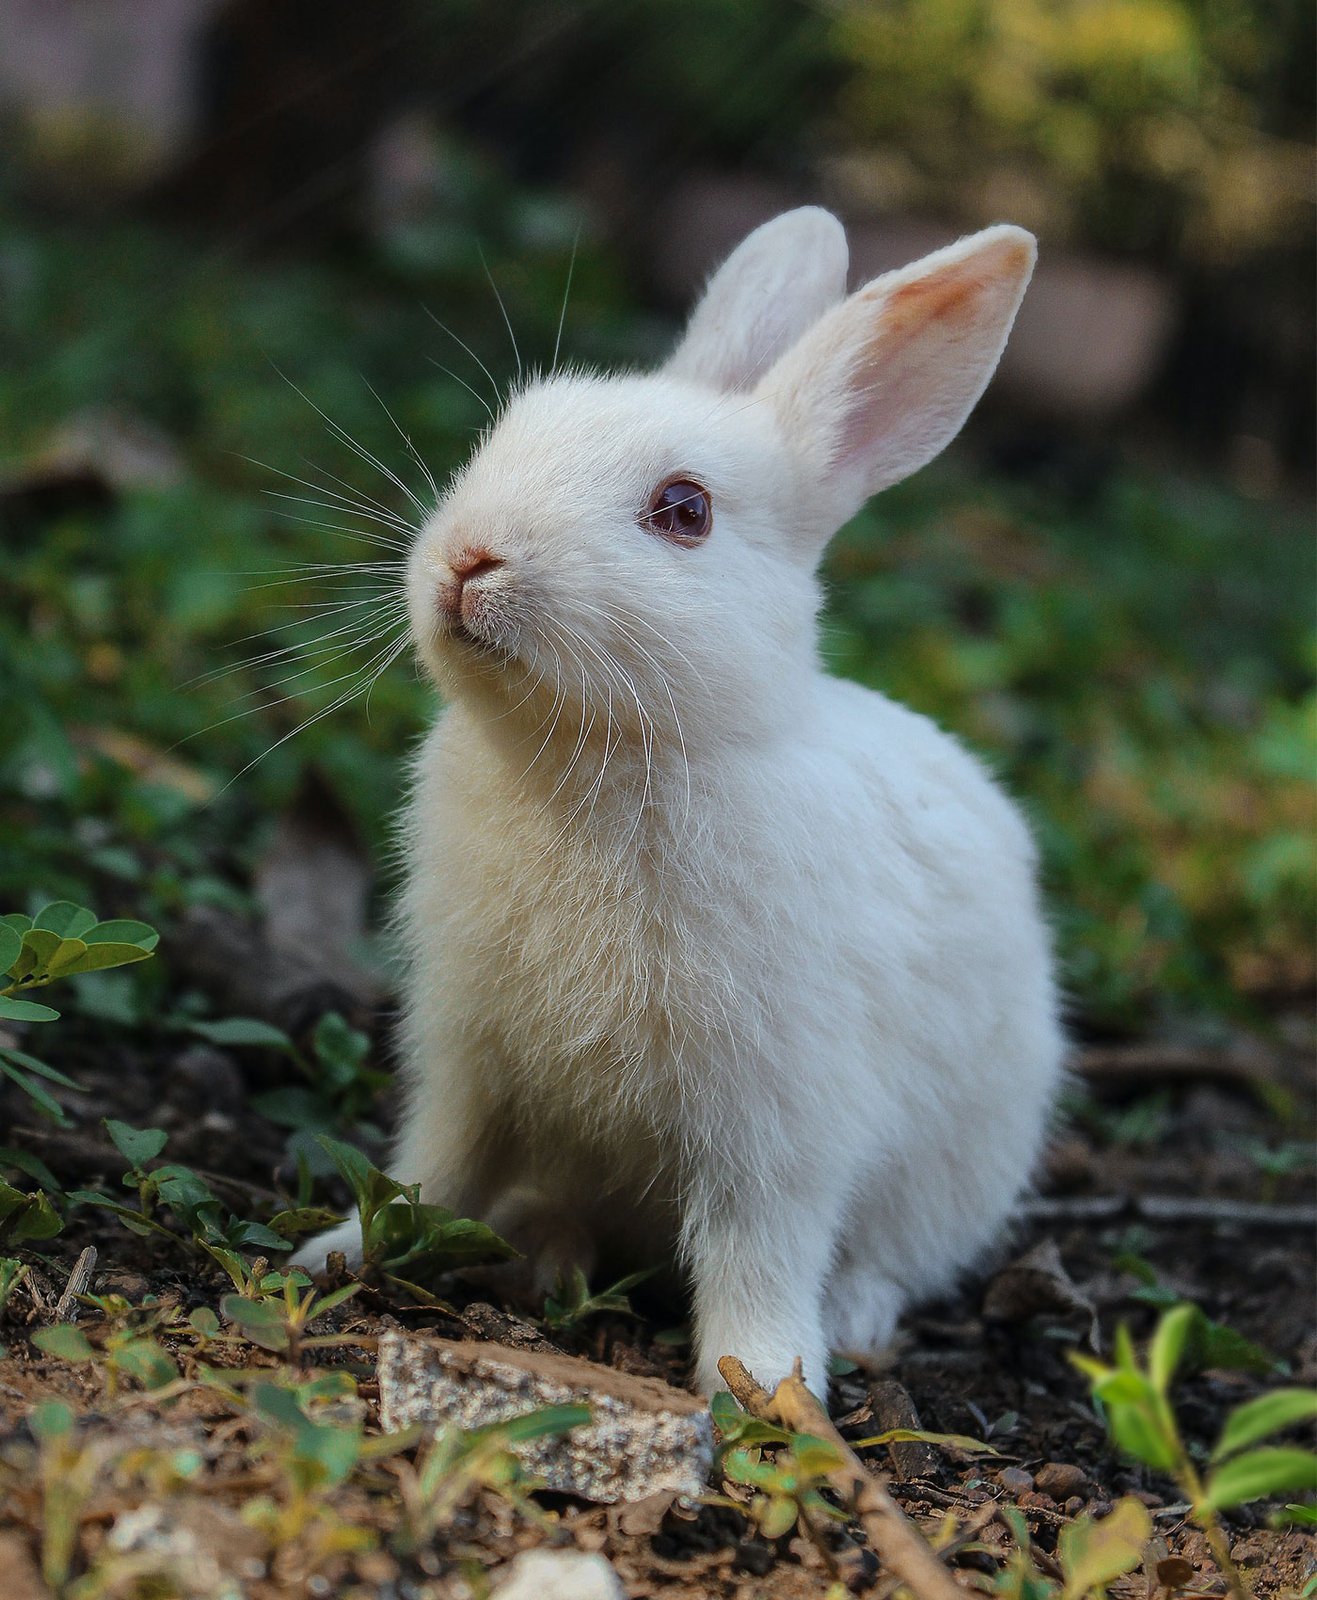 Un joli lapin blanc dans un jardin